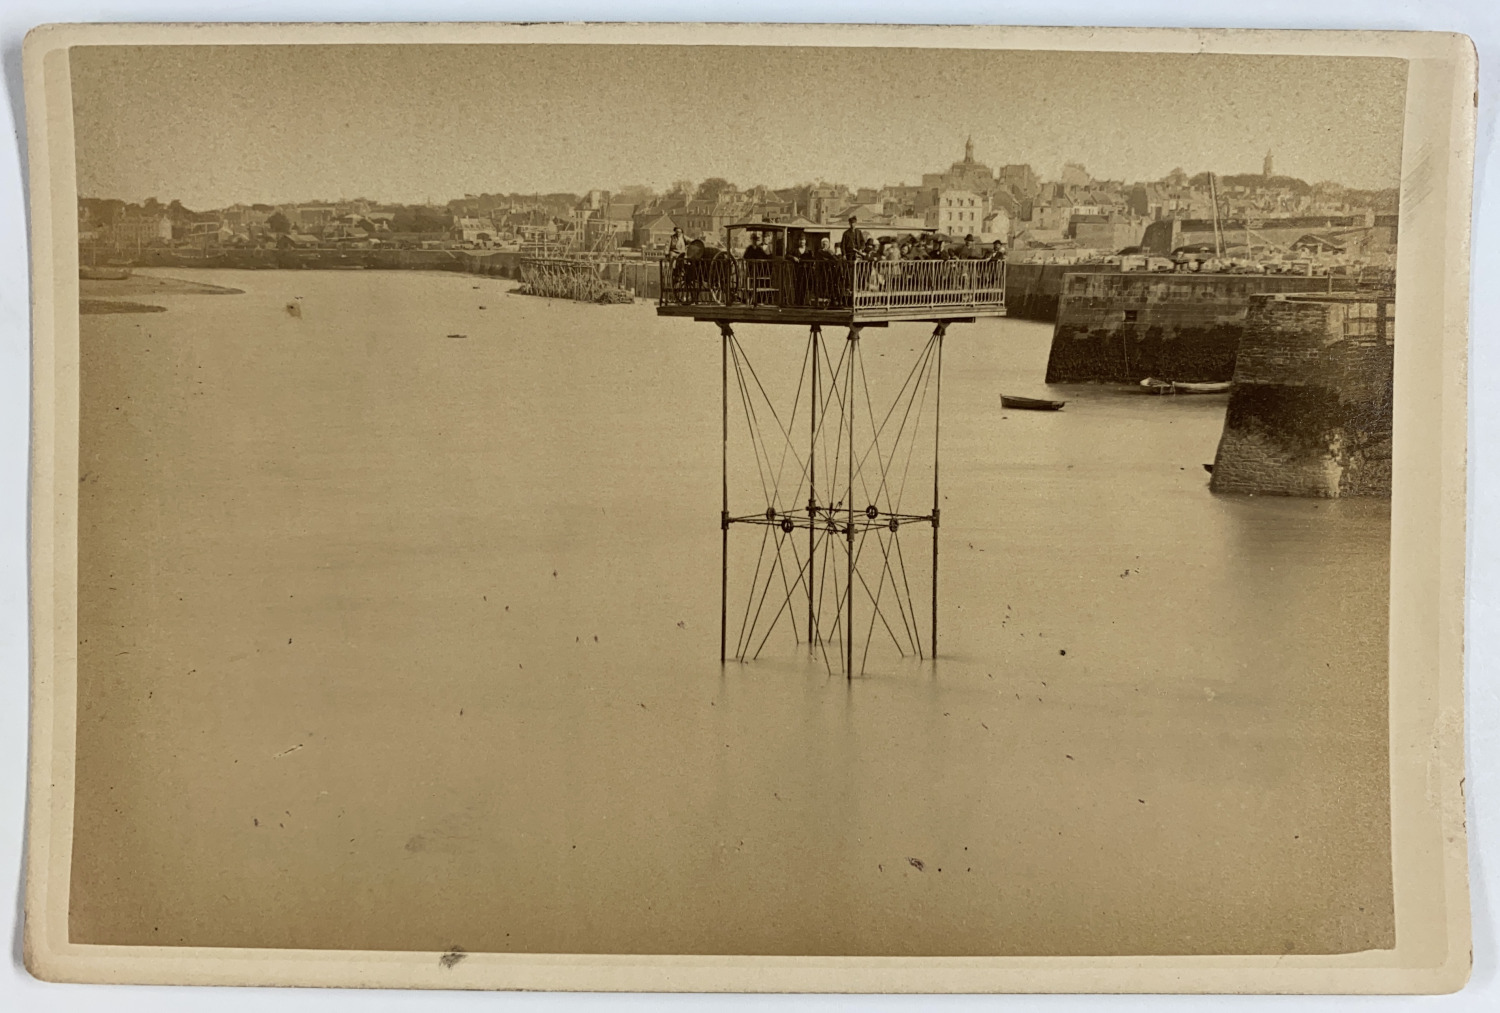 Oblin, France, Saint-Malo, Overhead Crane, albumen print, circa 1880 vintage album